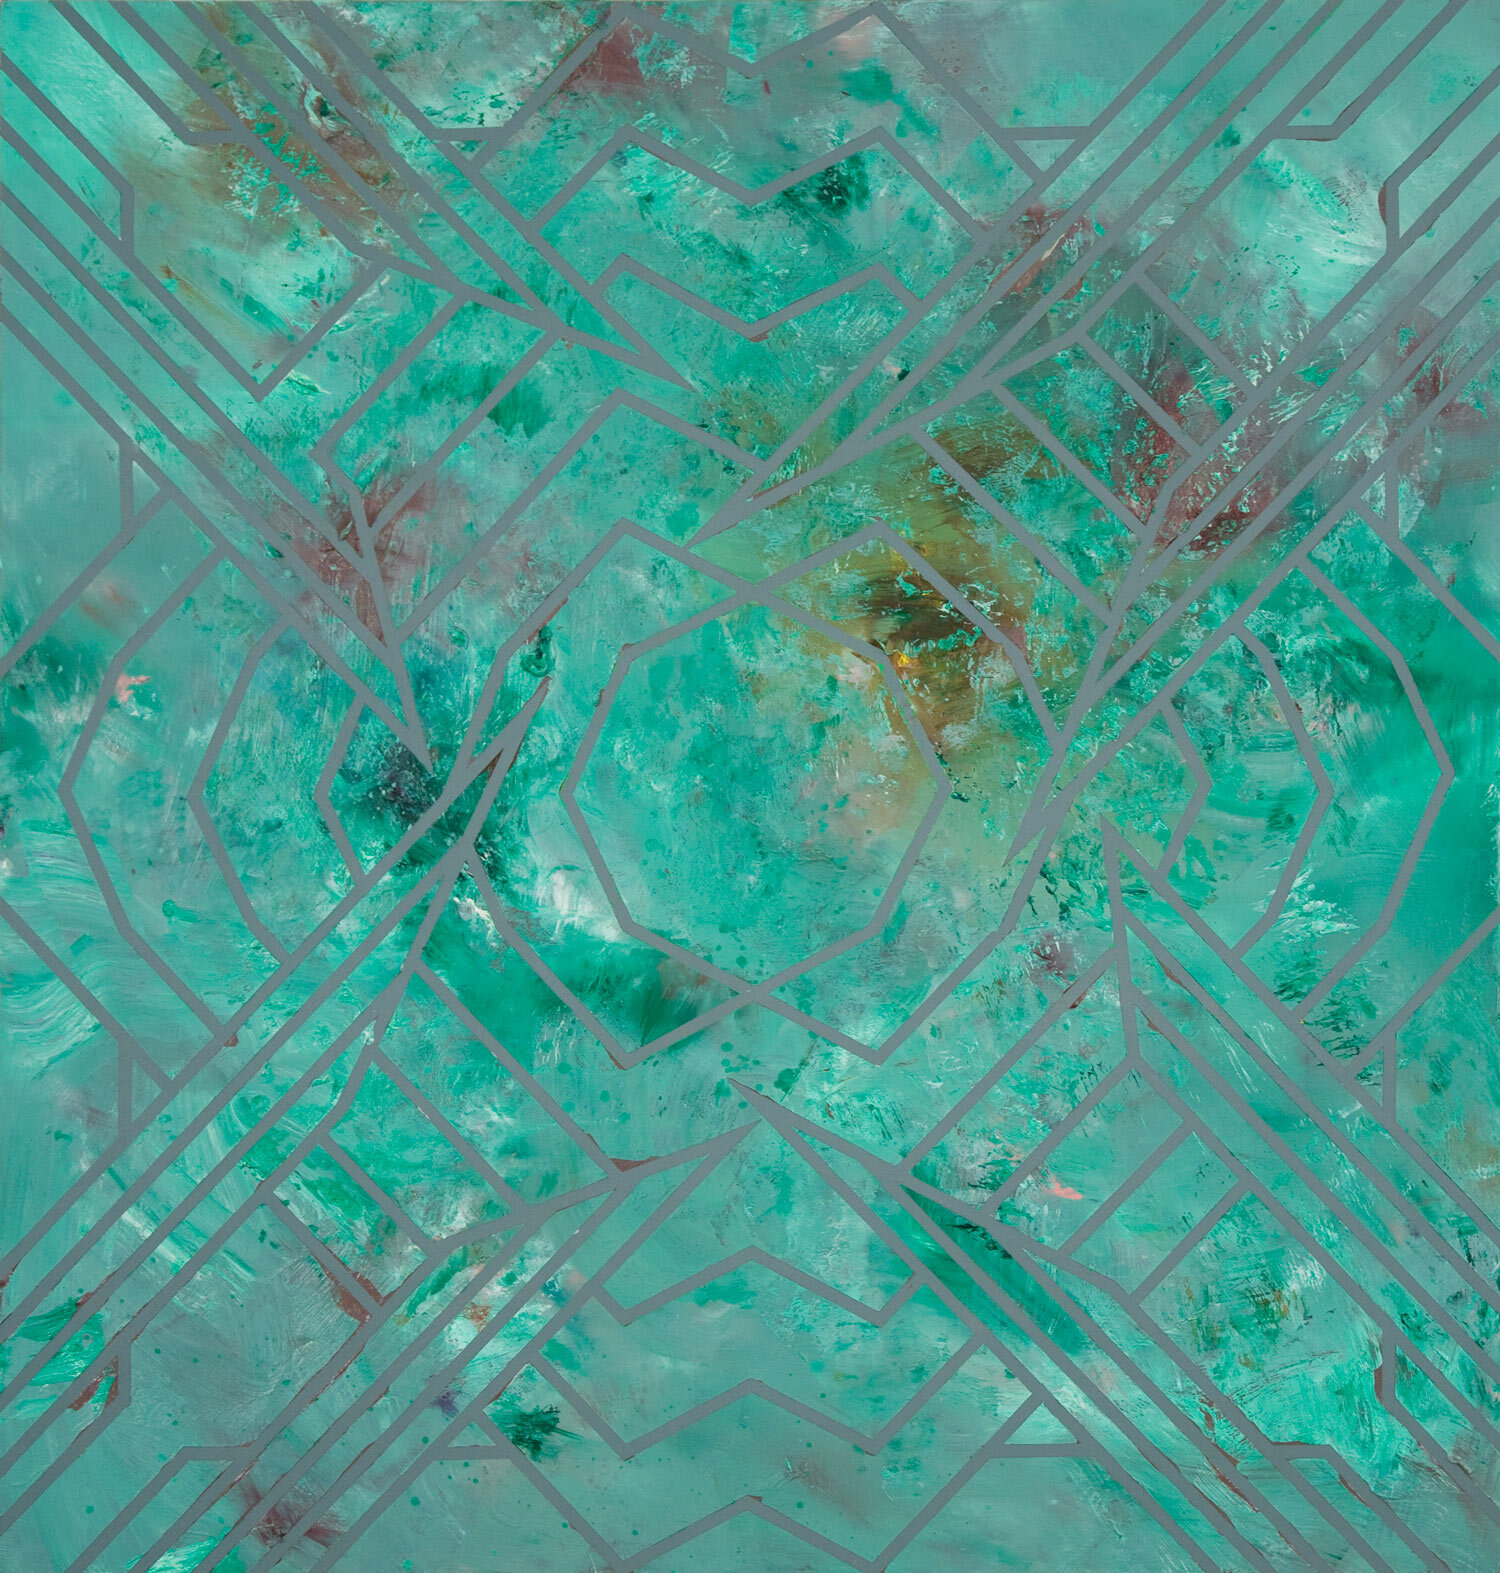    Emerald Twilight    Oil and acrylic on canvas  44” x 42”   